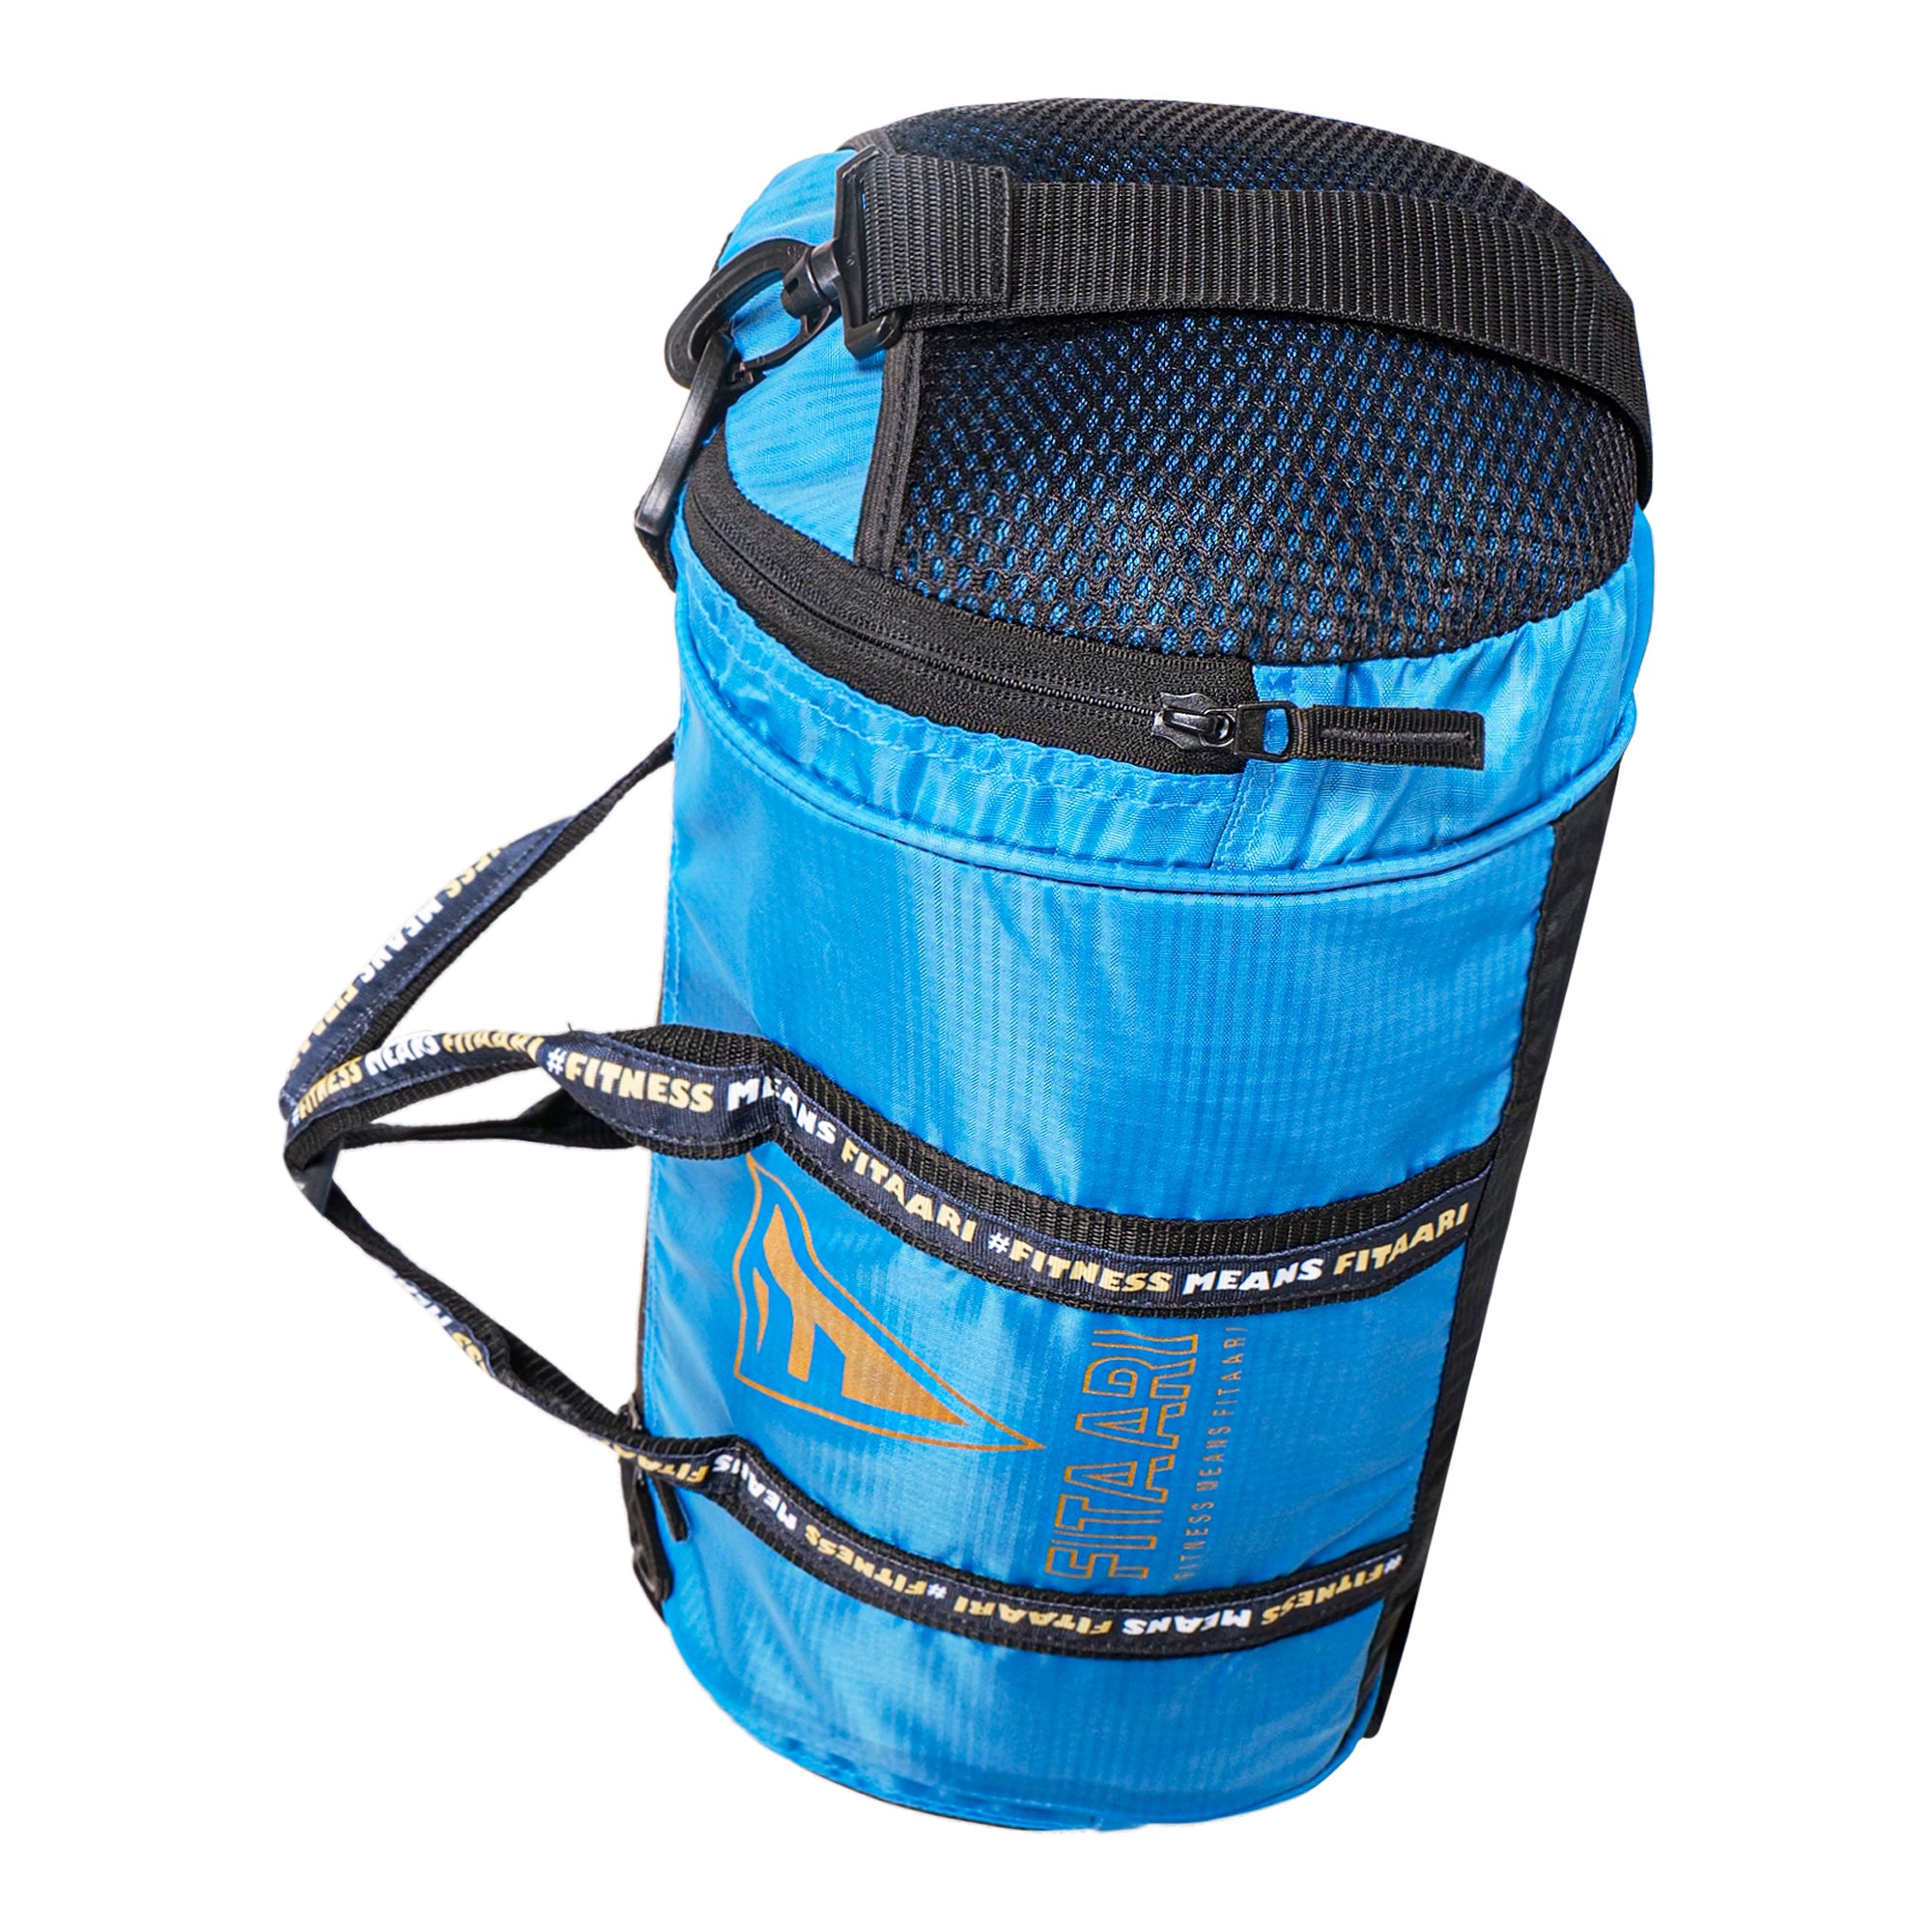 Fitaari Premium Bag! With Separate Shoe Compartment ! Water Resistance ! comforatble Handle Grip ! Adjustable And Removable Shoulder Strap